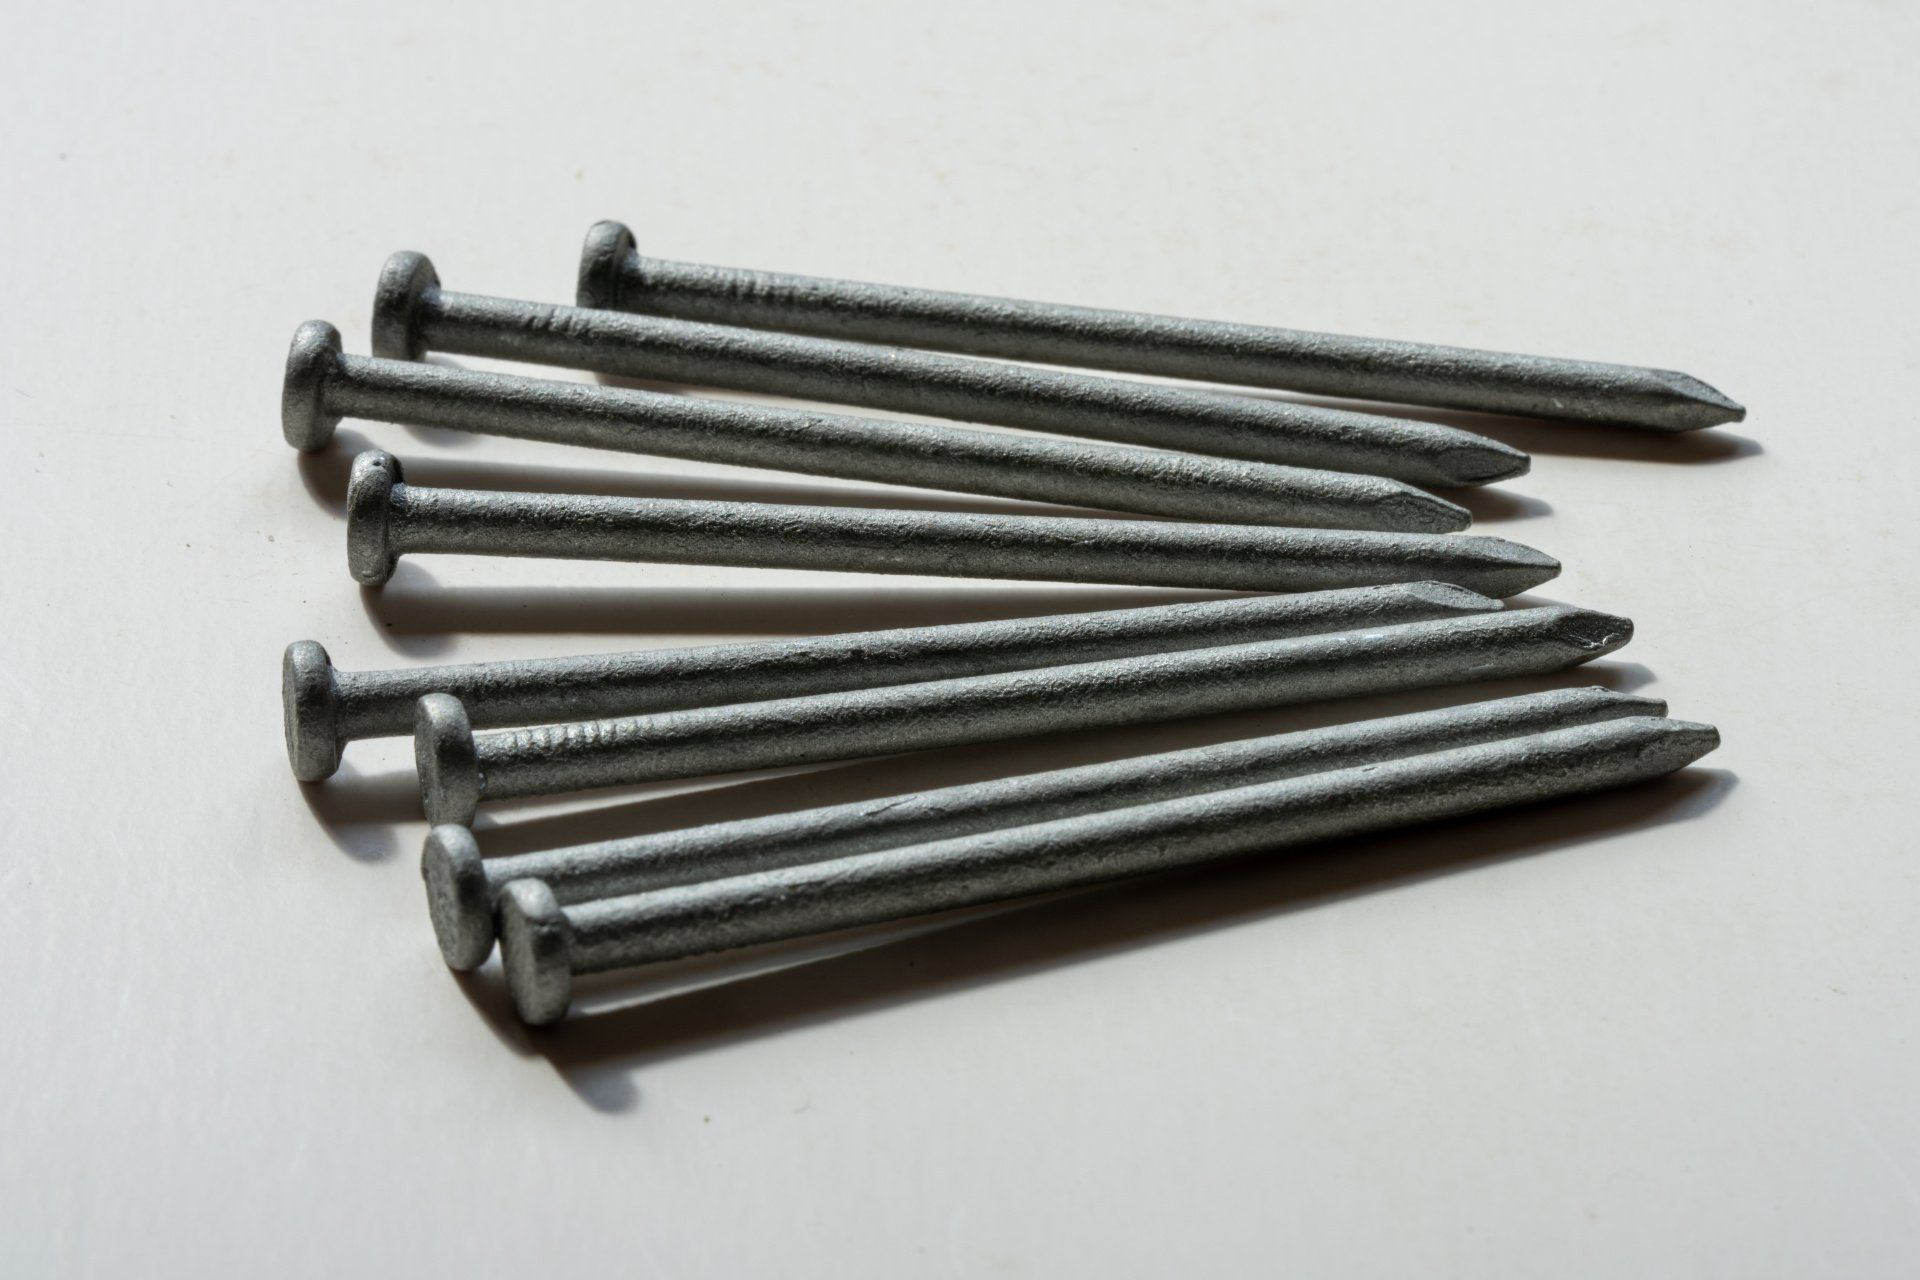 a close up of hardware nails